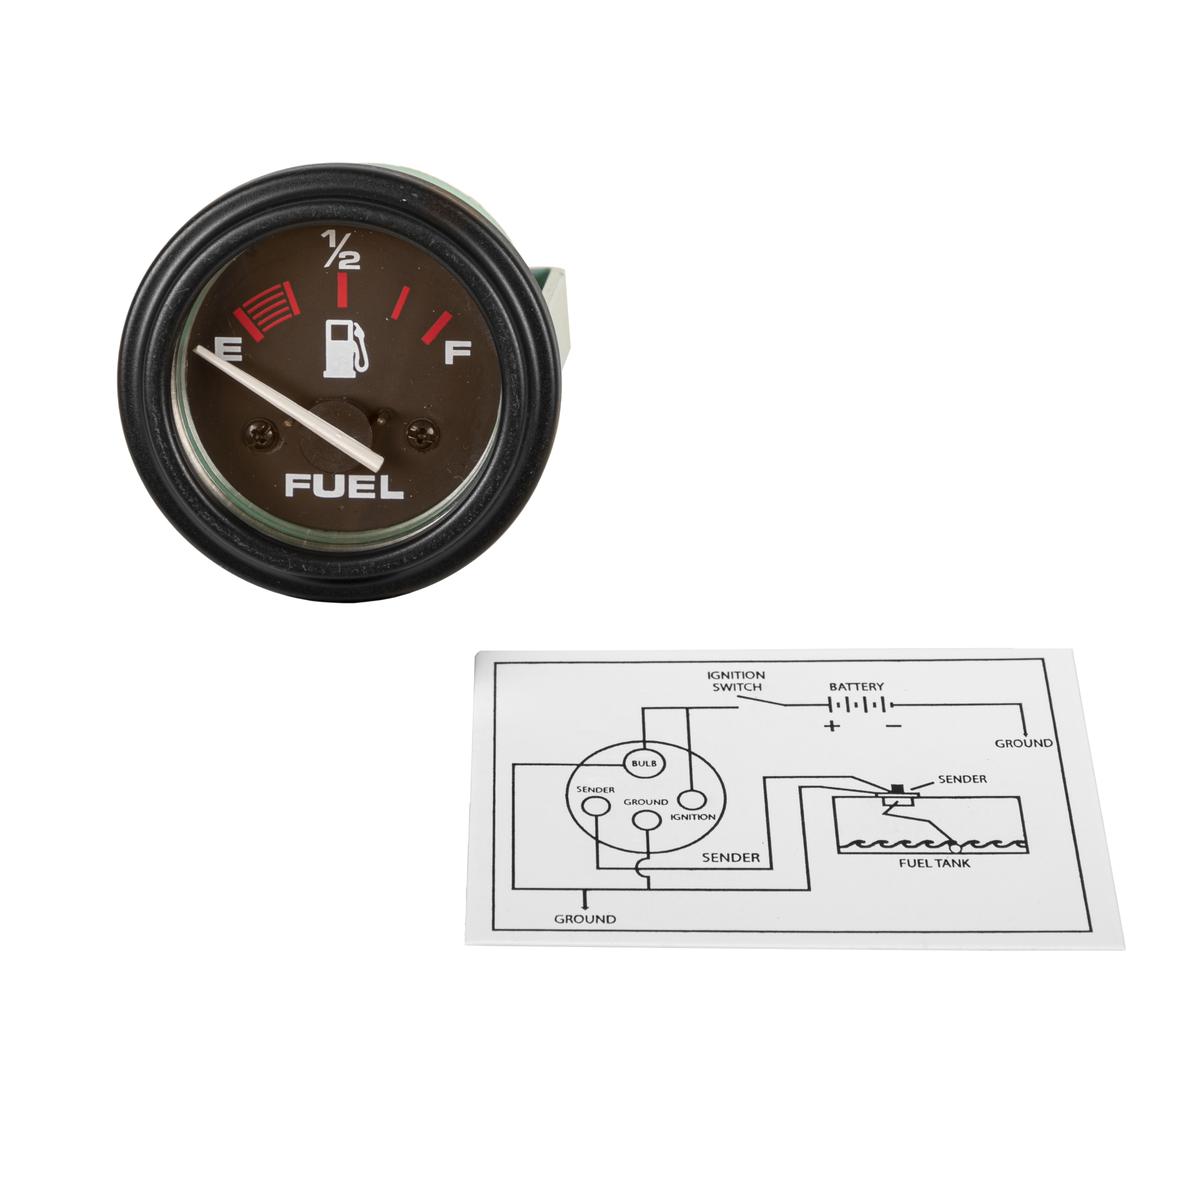 Reliance Fuel Sender and Meter Kit (Black)